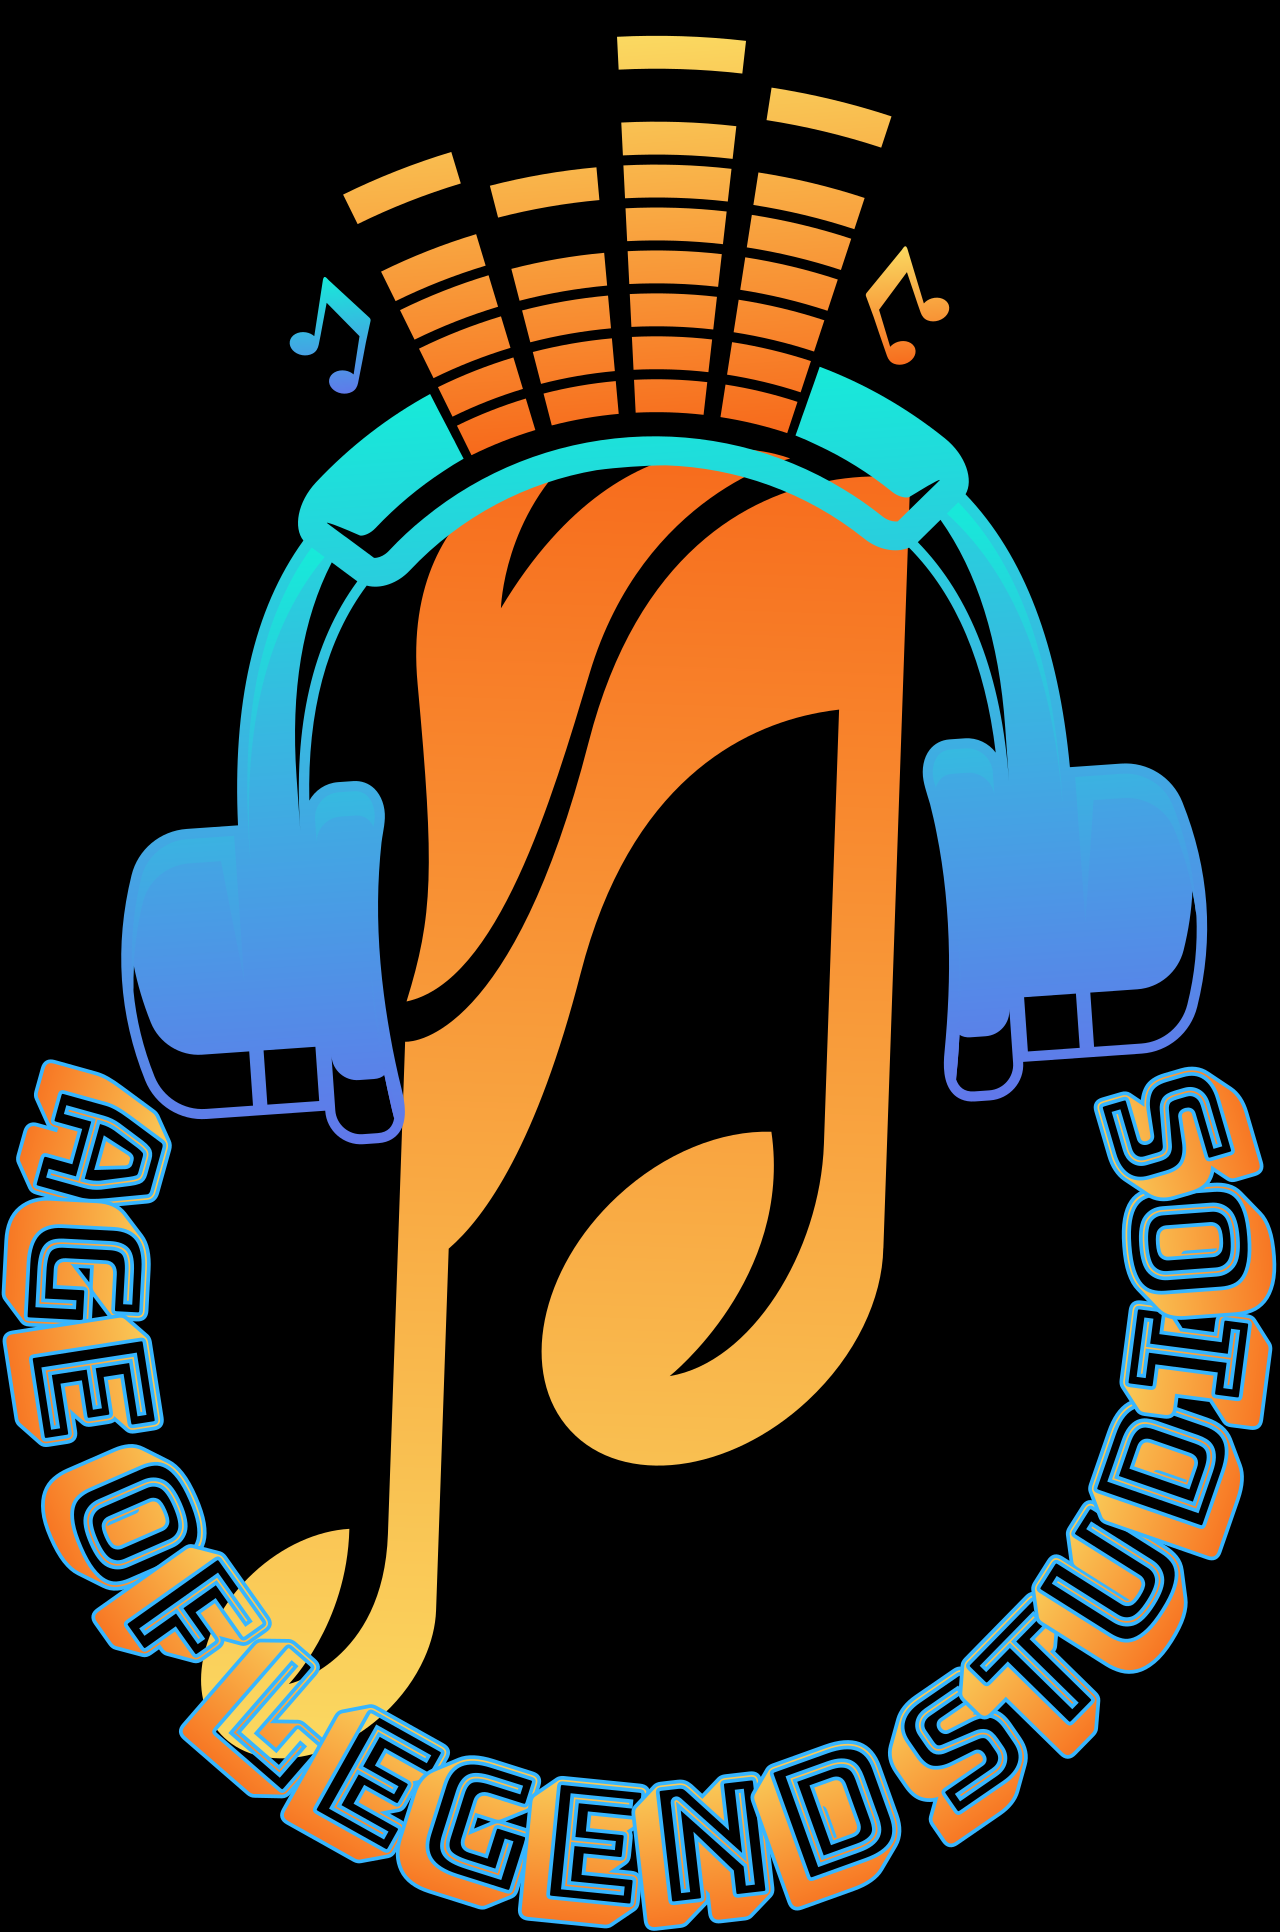  AGE OF LEGEND  STUDIOS 's logo